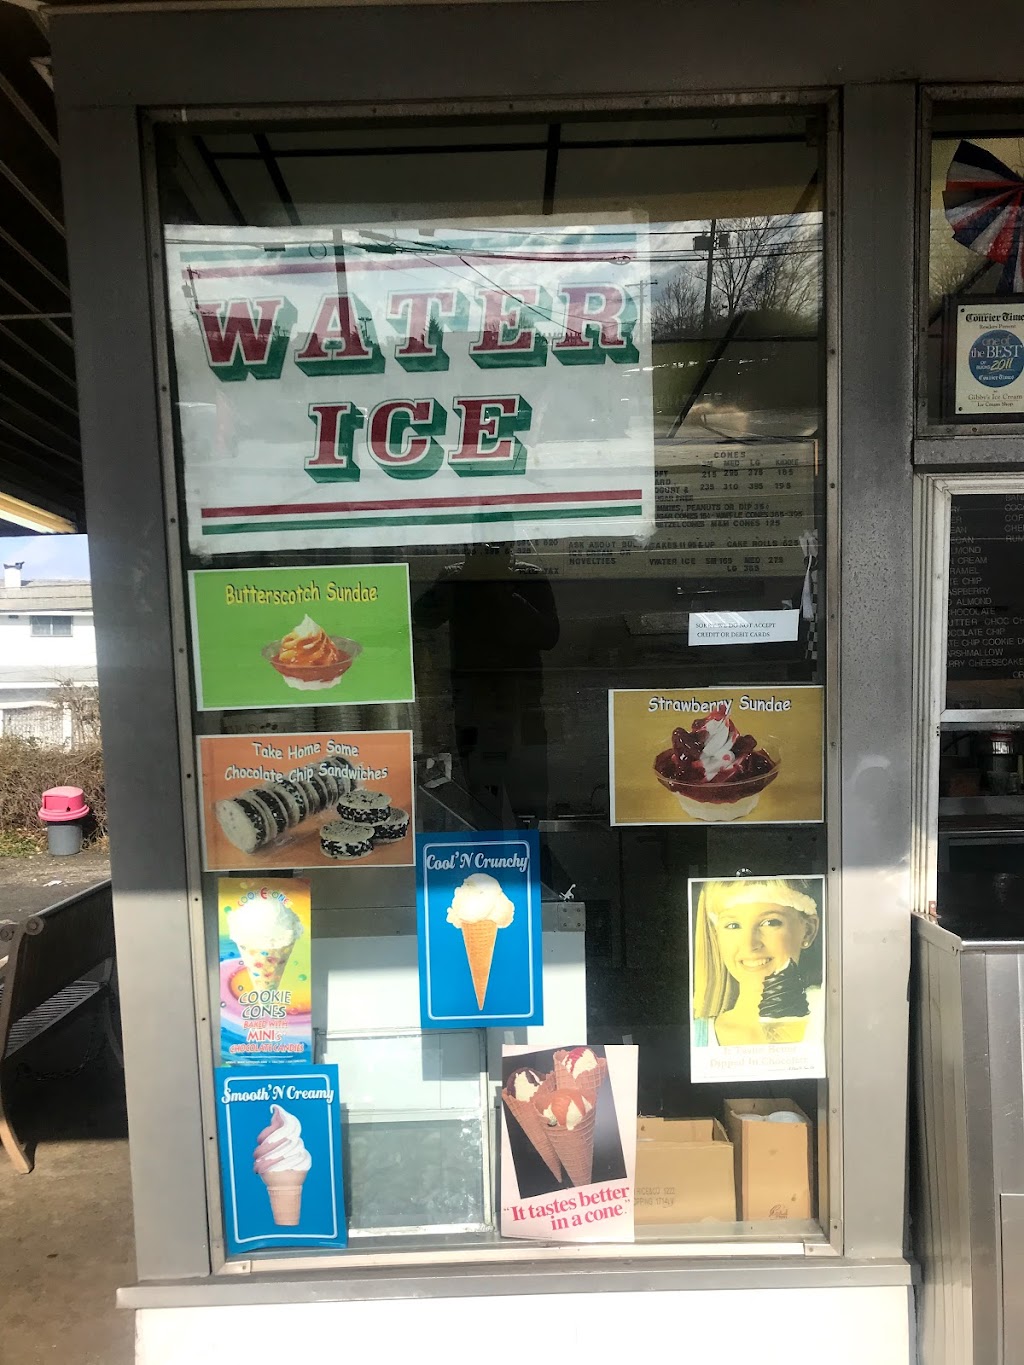 Gibbys Ice Cream Store | 4010 Veterans Hwy, Levittown, PA 19056 | Phone: (215) 945-1700